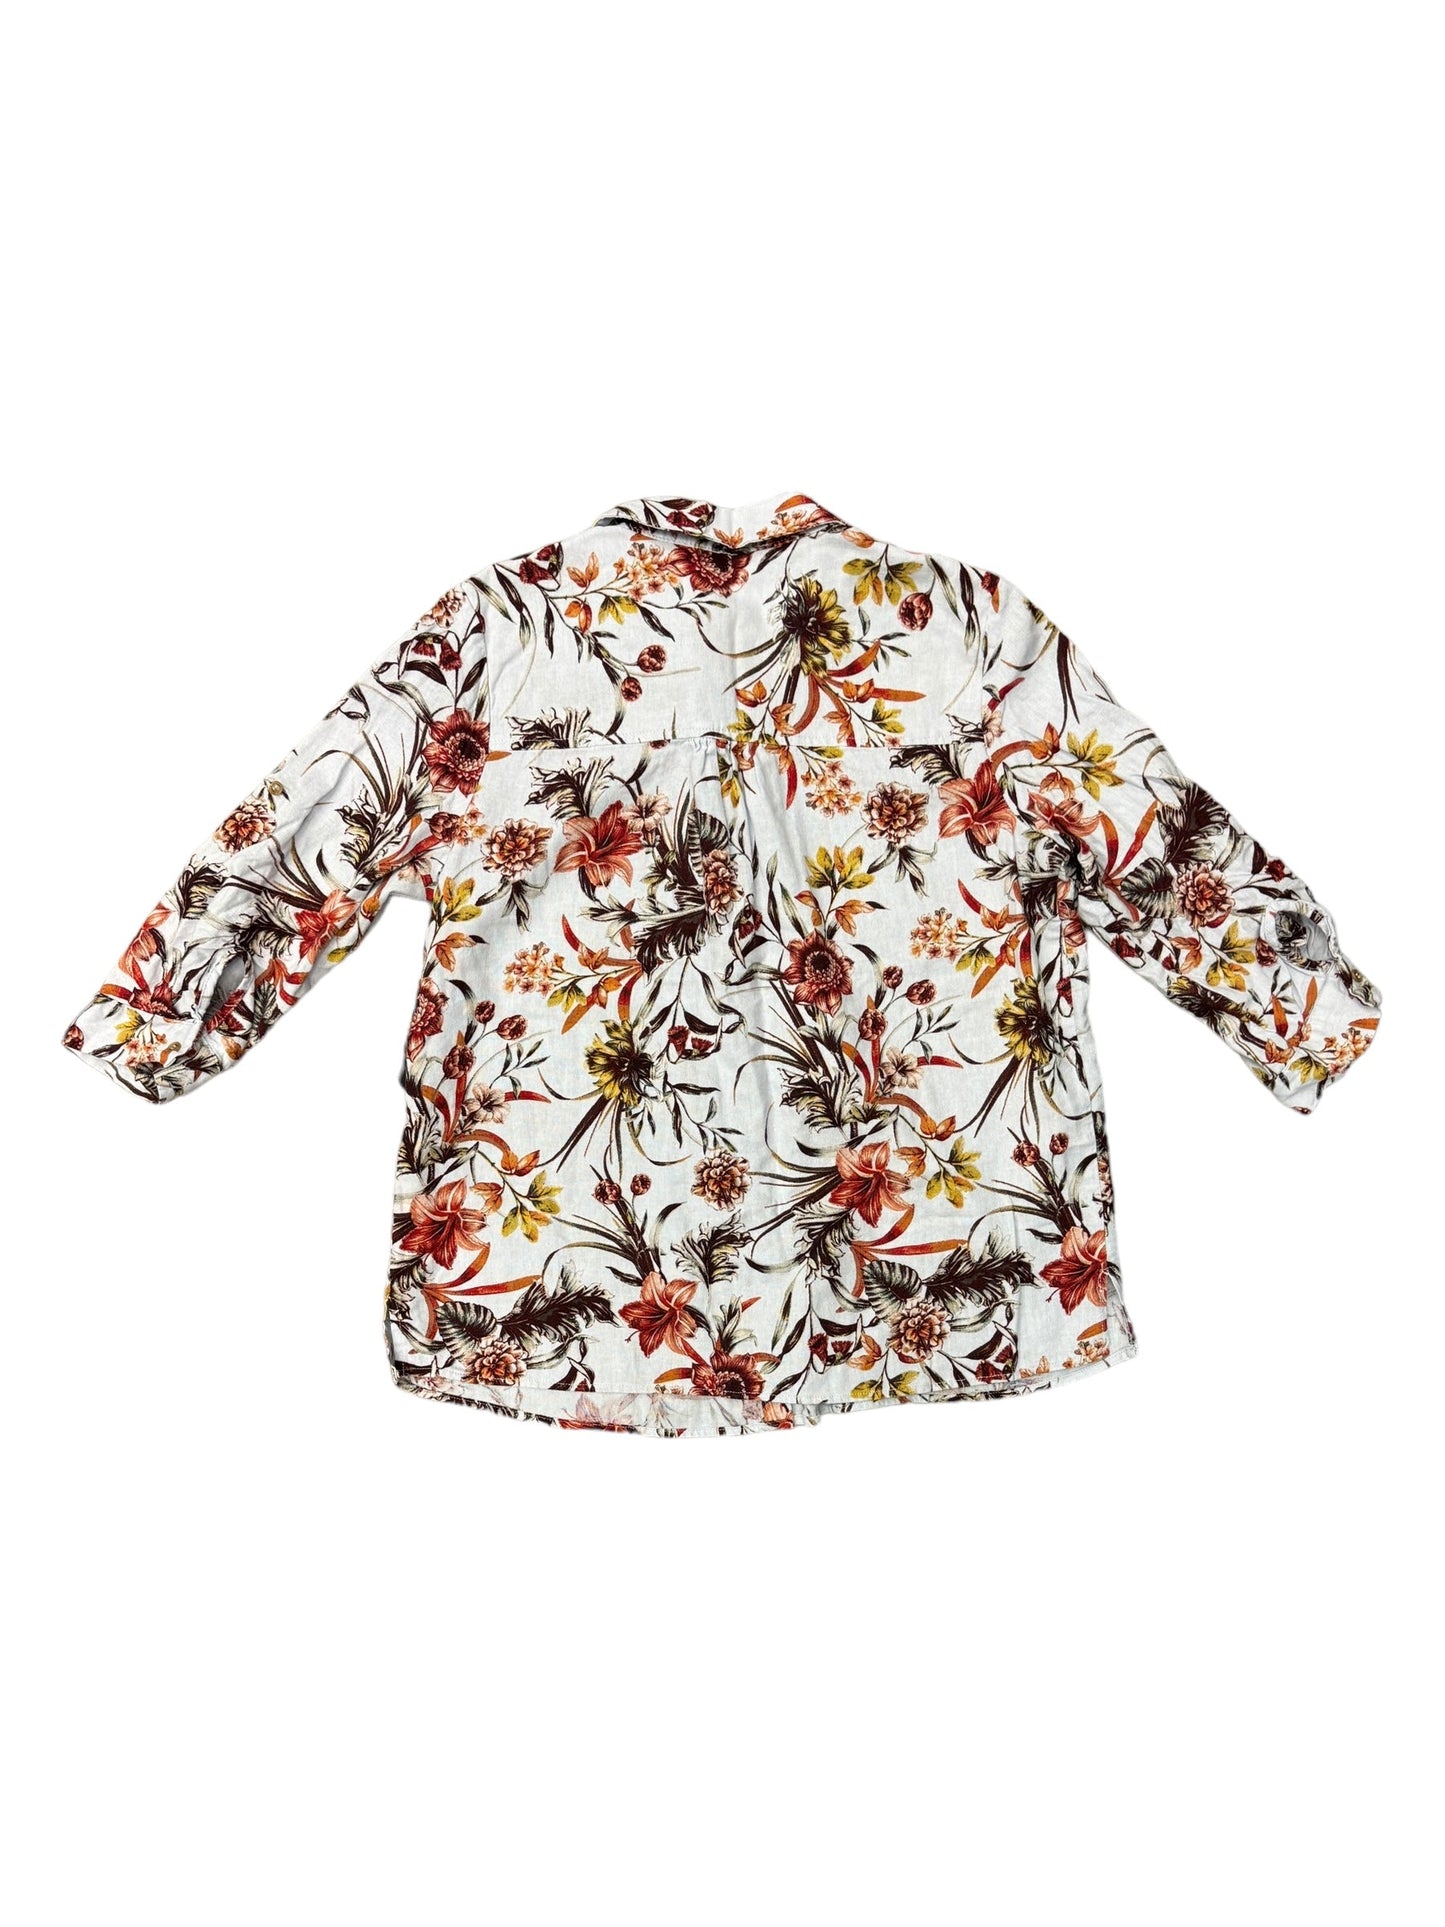 Floral Print Blouse 3/4 Sleeve Gloria Vanderbilt, Size M